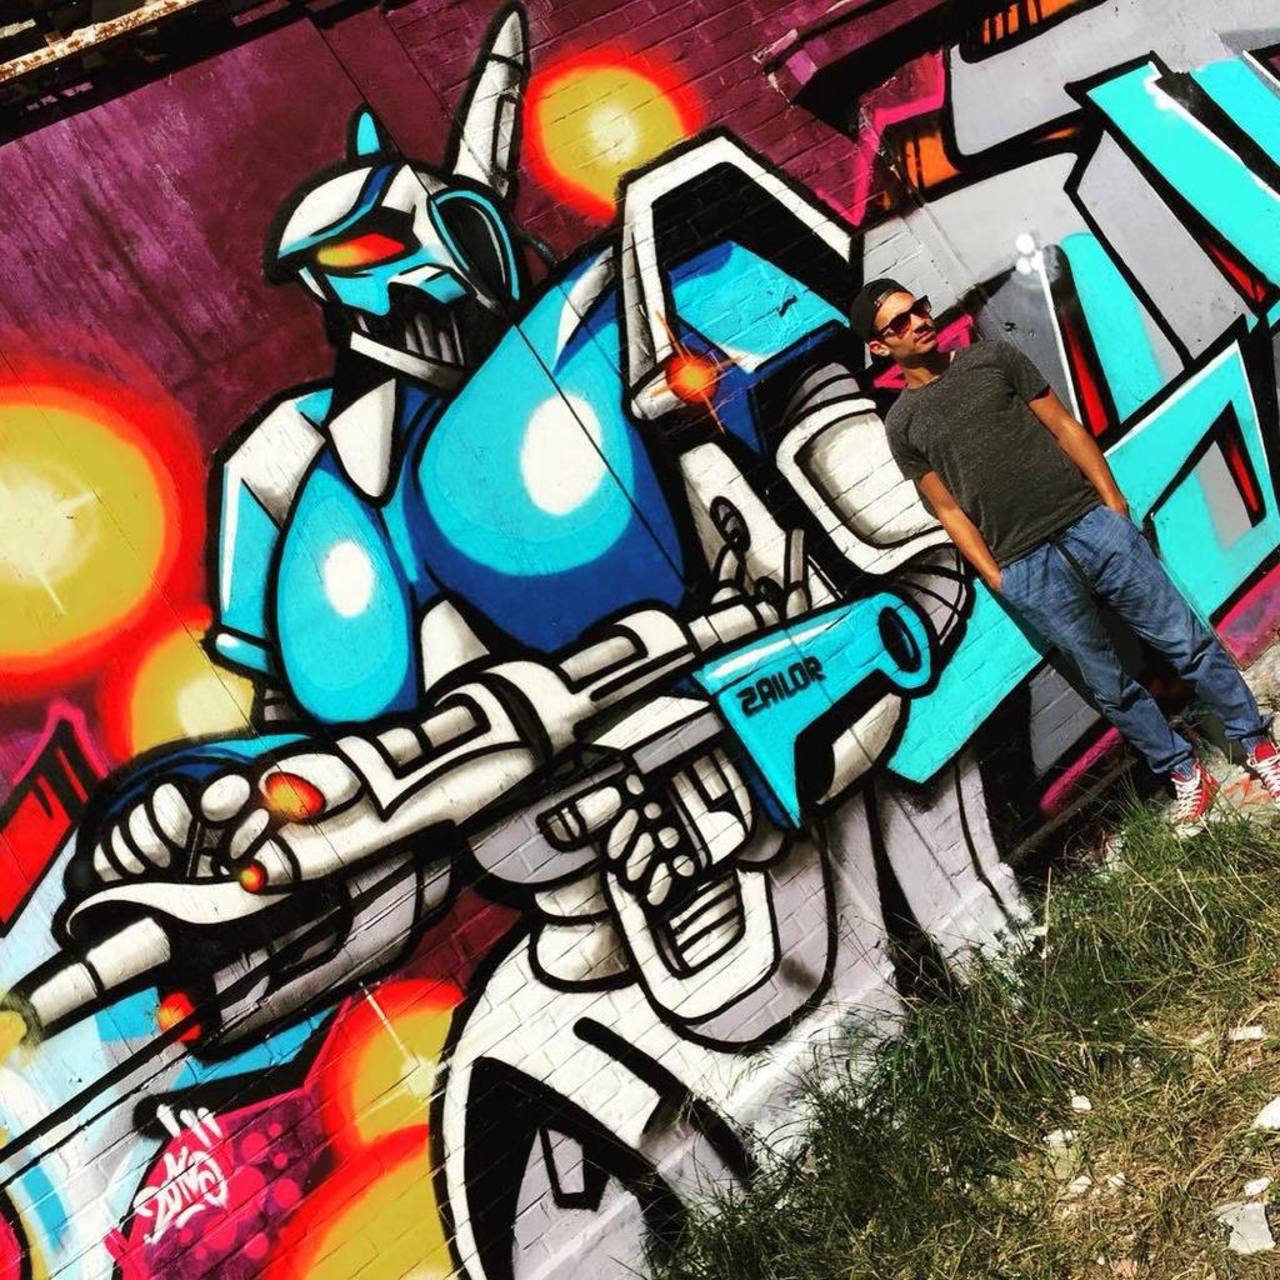 RT @Otherbots: #Art #graffiti #robot #itzehoe #colorful #cool #american #germanart #streetart #urbanart #colors by whoisyrone http://t.co/v2kdzGZ635